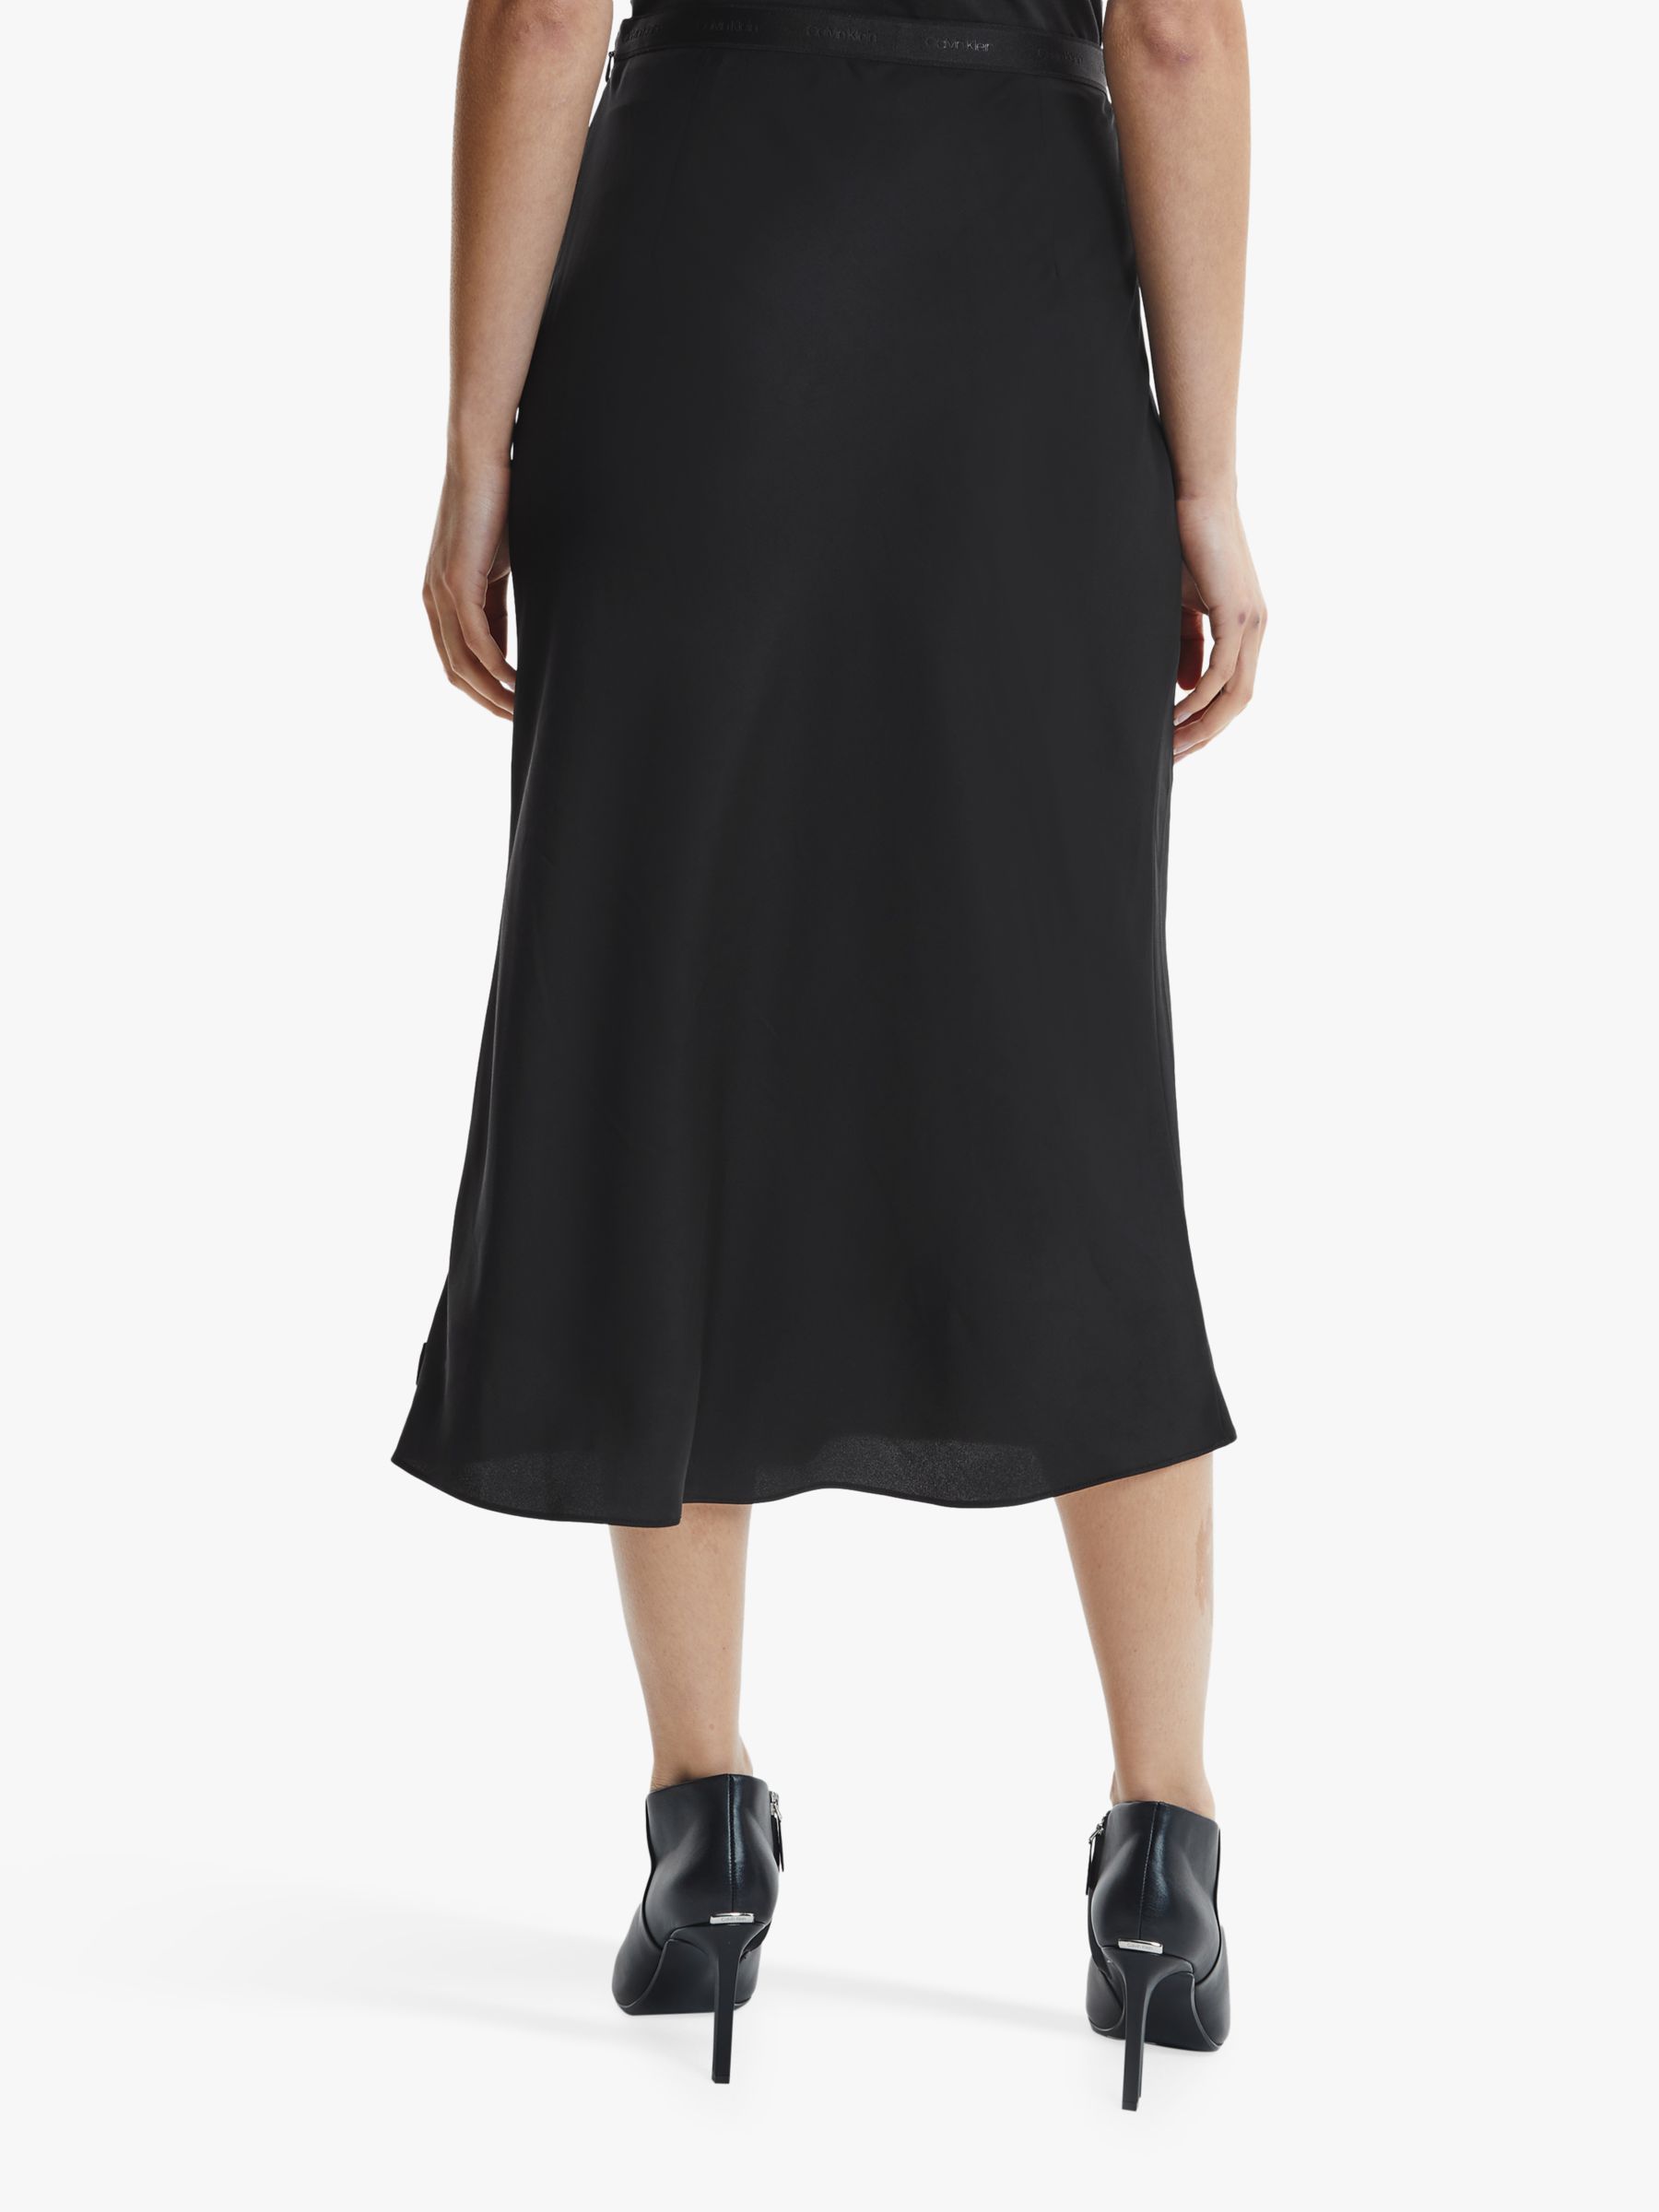 Calvin Klein Bias Cut Midi Skirt, Black at John Lewis & Partners